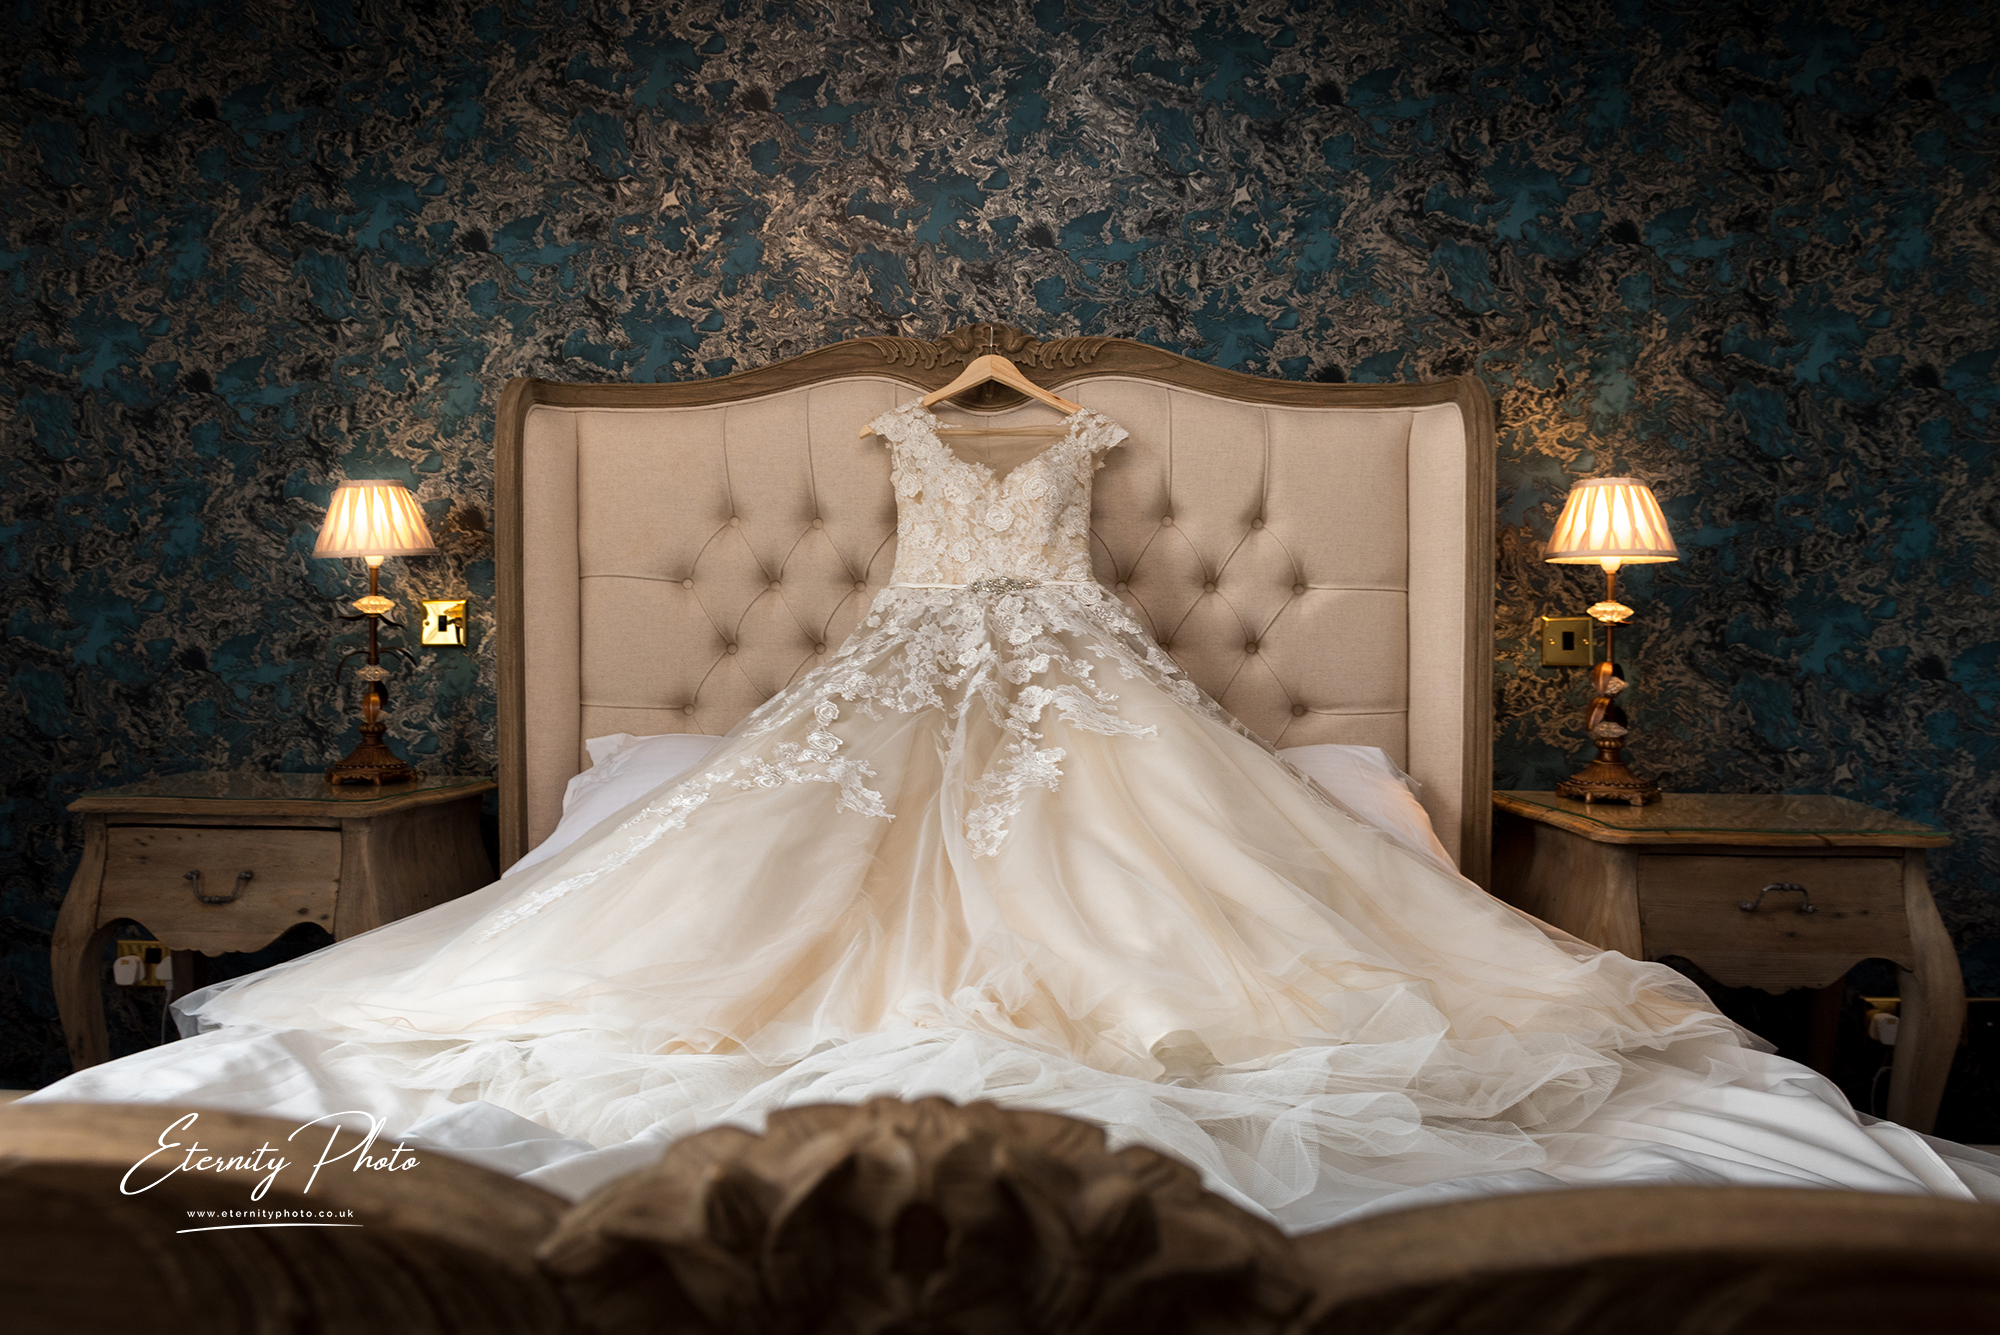 Elegant wedding dress on bed with vintage decor.